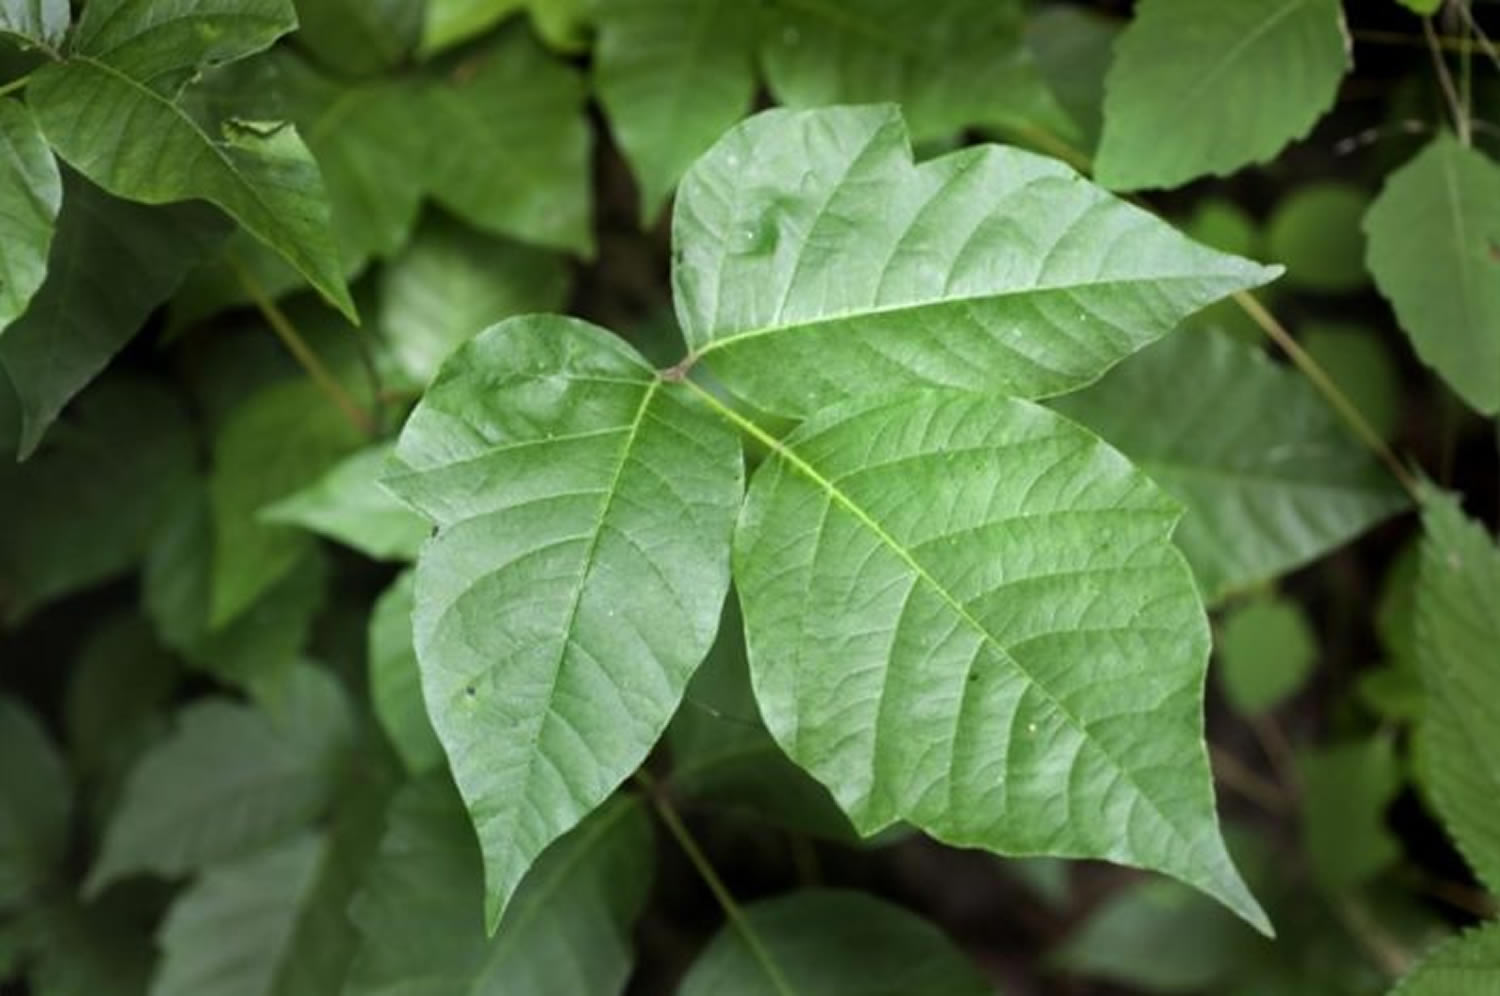 Poison Ivy Rash - Causes, How To Identify Poison Ivy Rash & Treatment